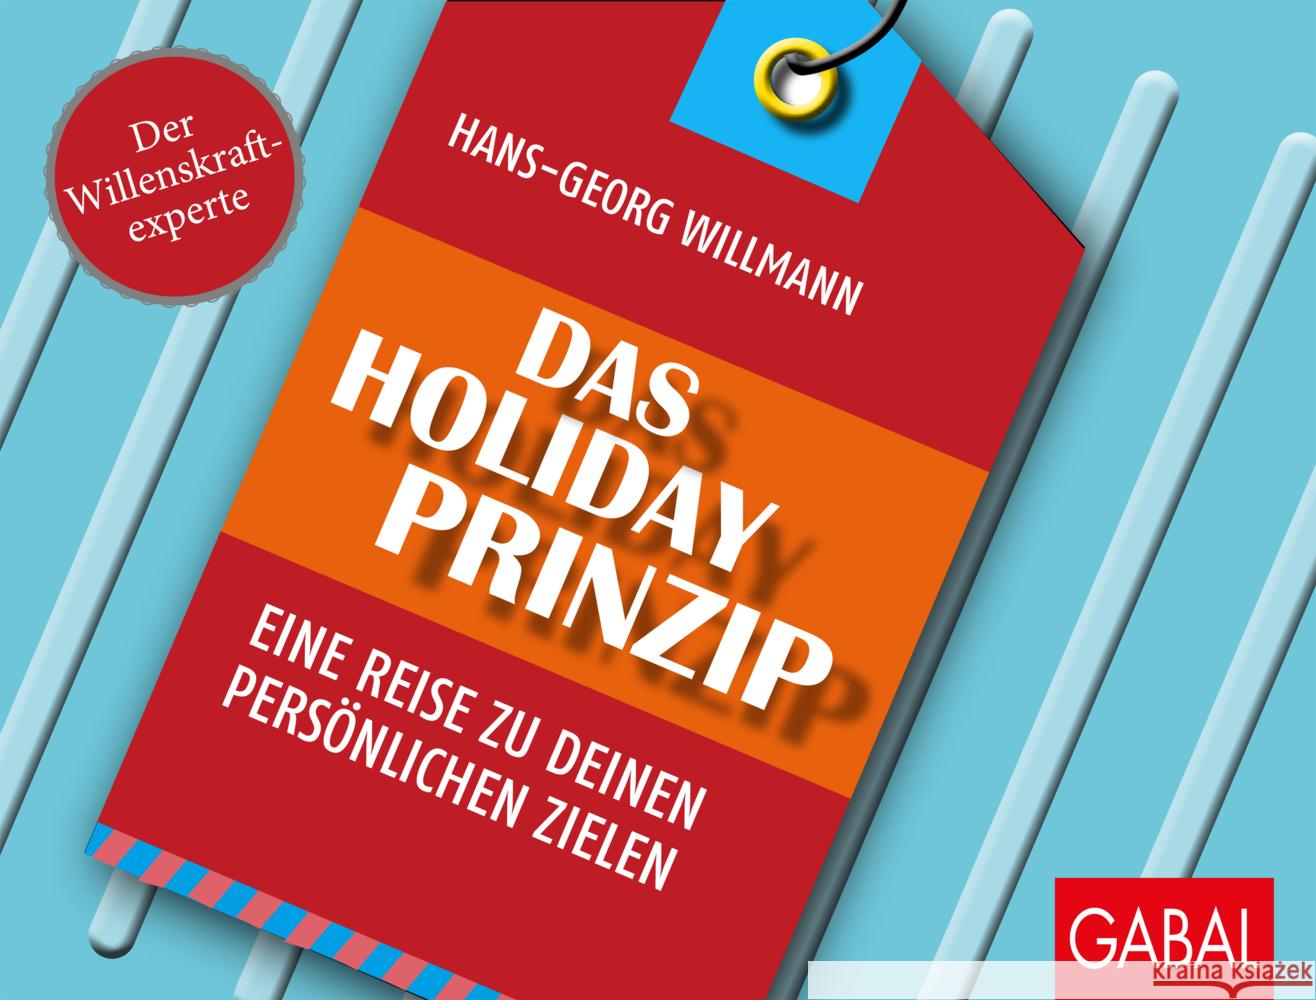 Das Holiday-Prinzip Willmann, Hans-Georg 9783967390391